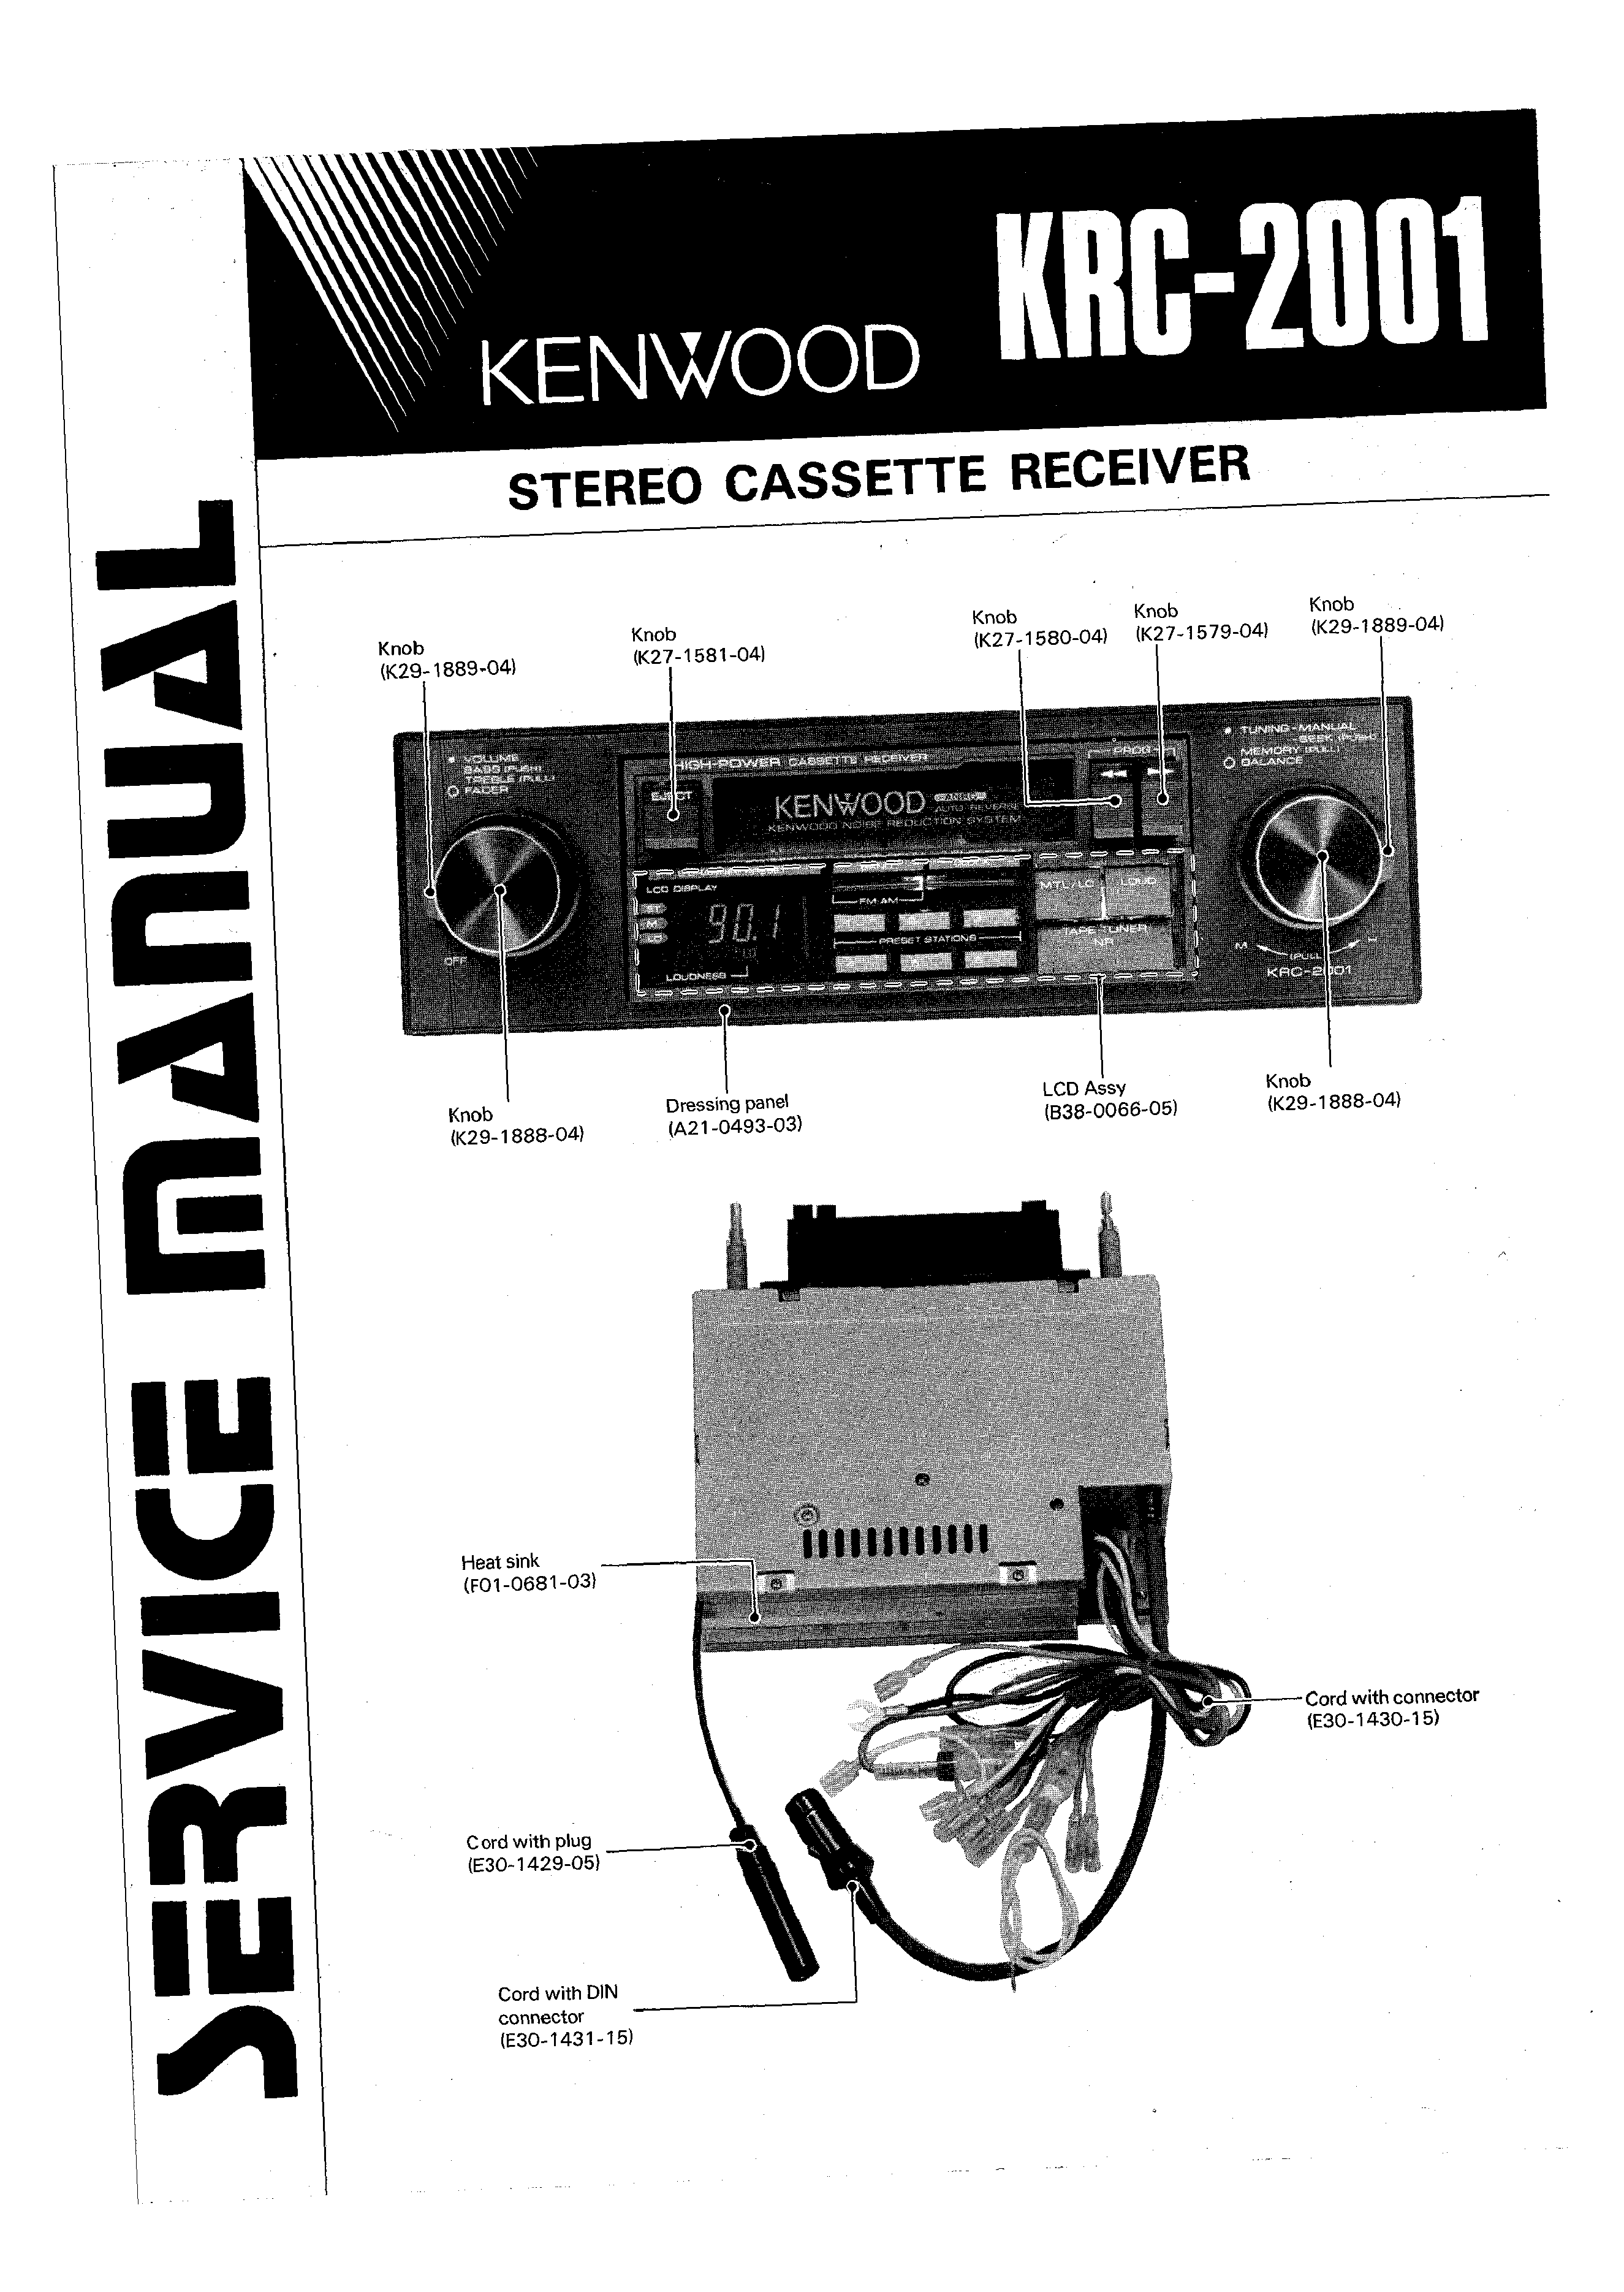 KENWOOD KRC2001 - Service Manual Immediate Download